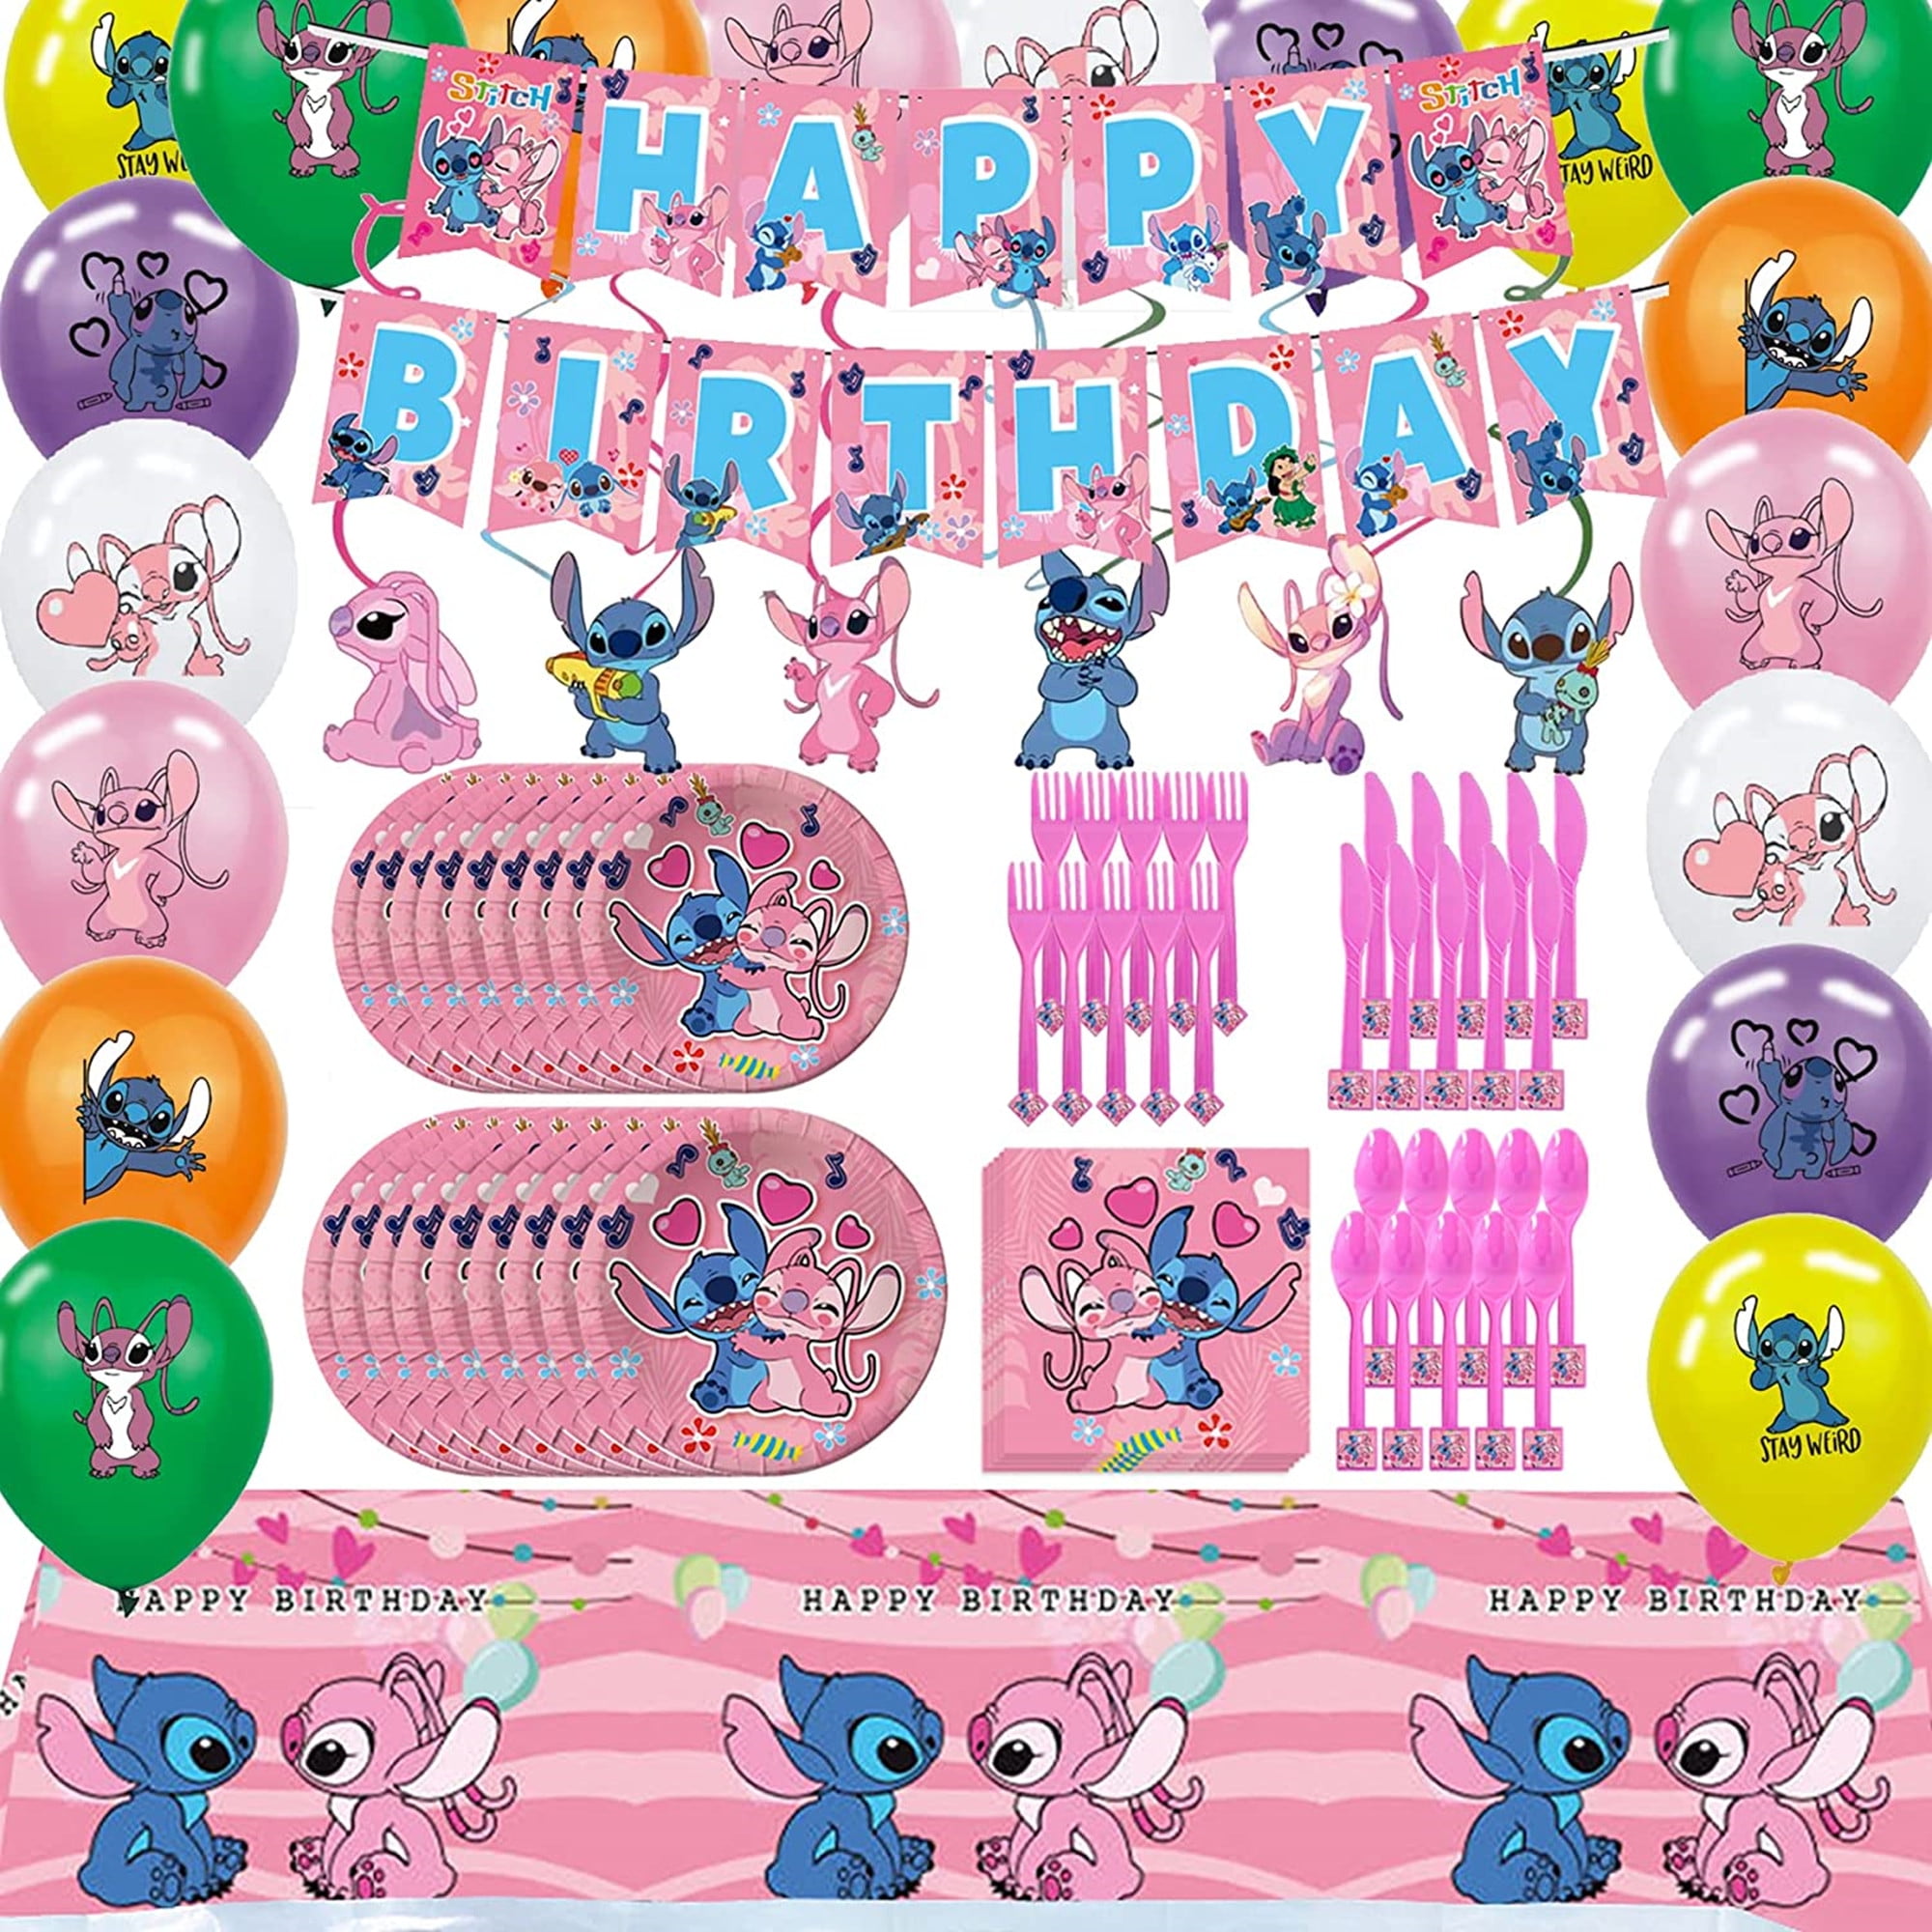 6 PCS Stitch Birthday Party Balloons, Stitch Party Decorations